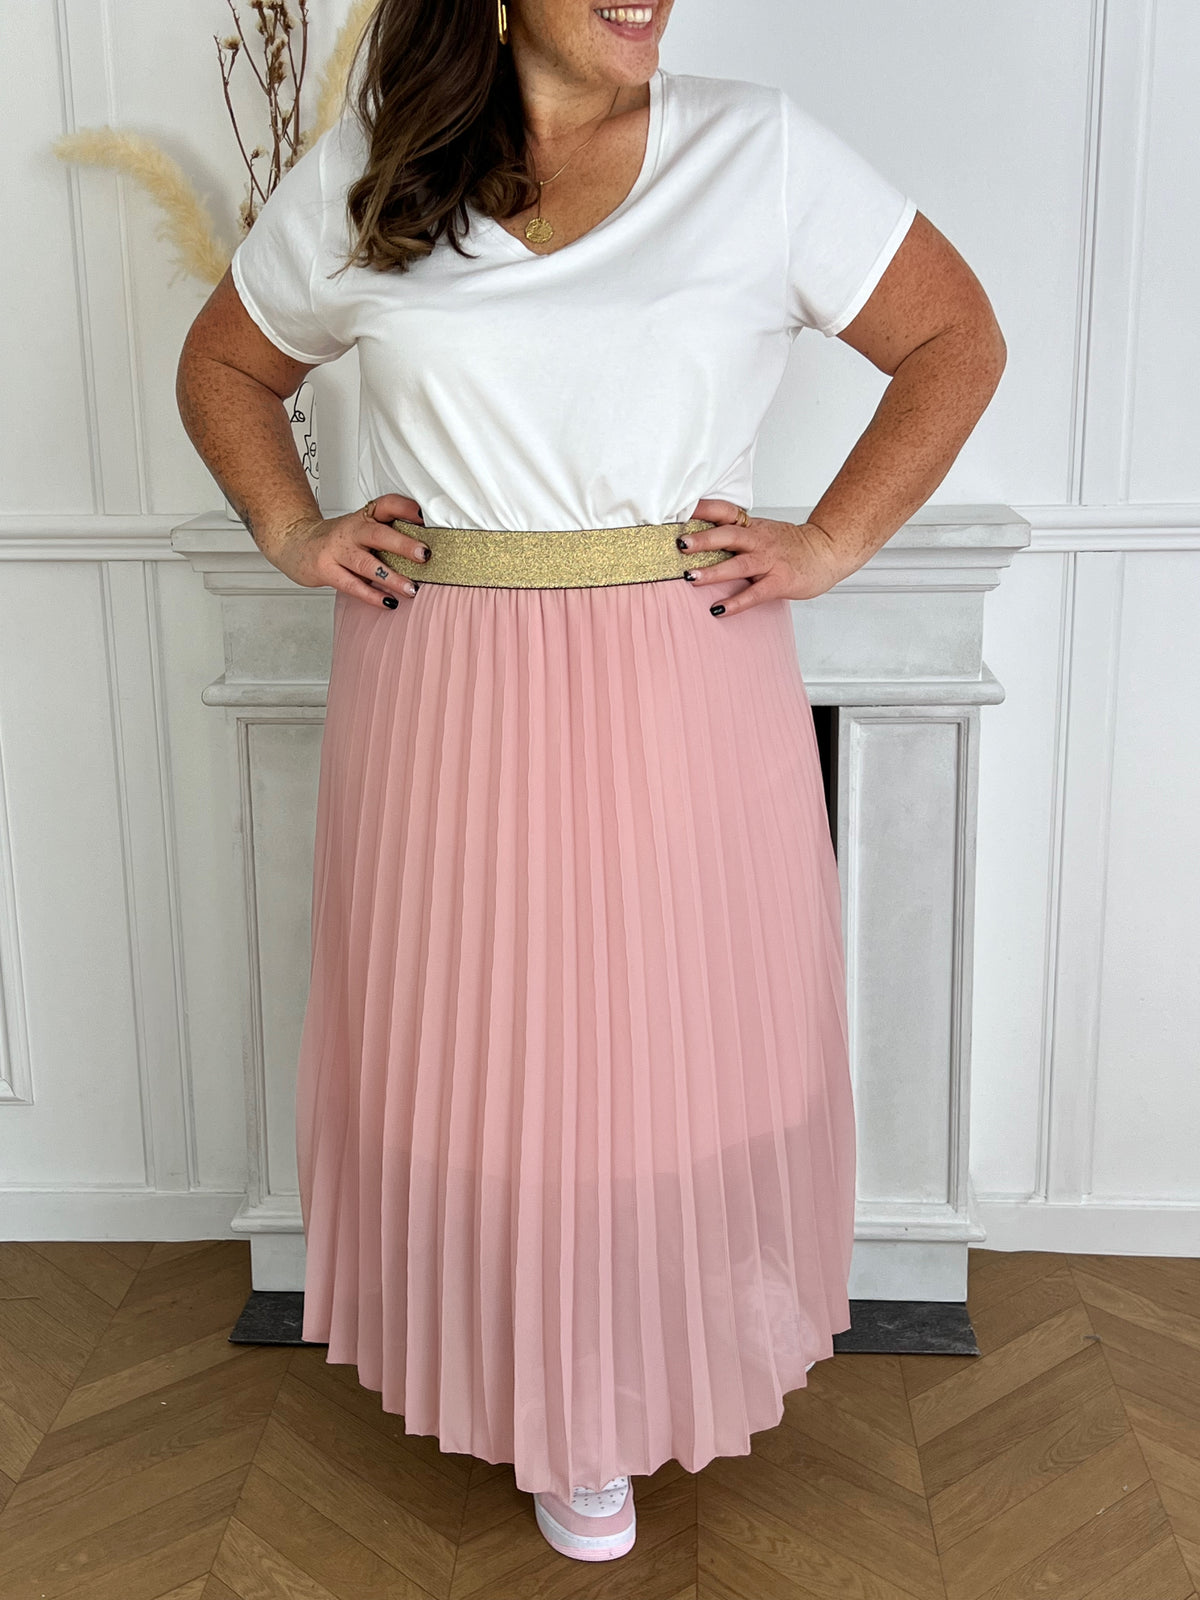 Jupe longue plissée rose pâle : Rania